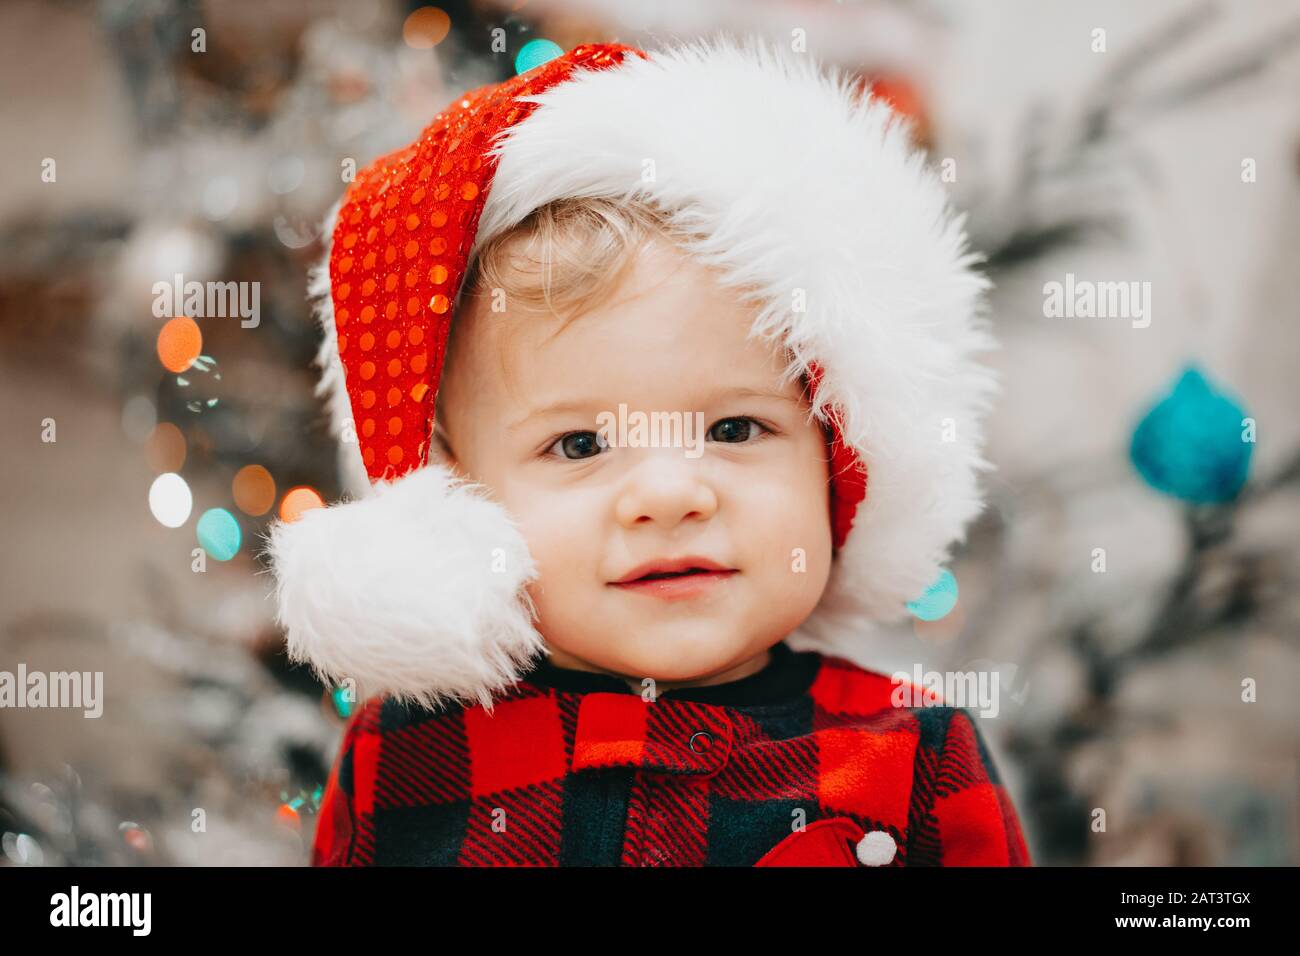 Very cute portrait of little baby boy in Santa hat on Christmas ...